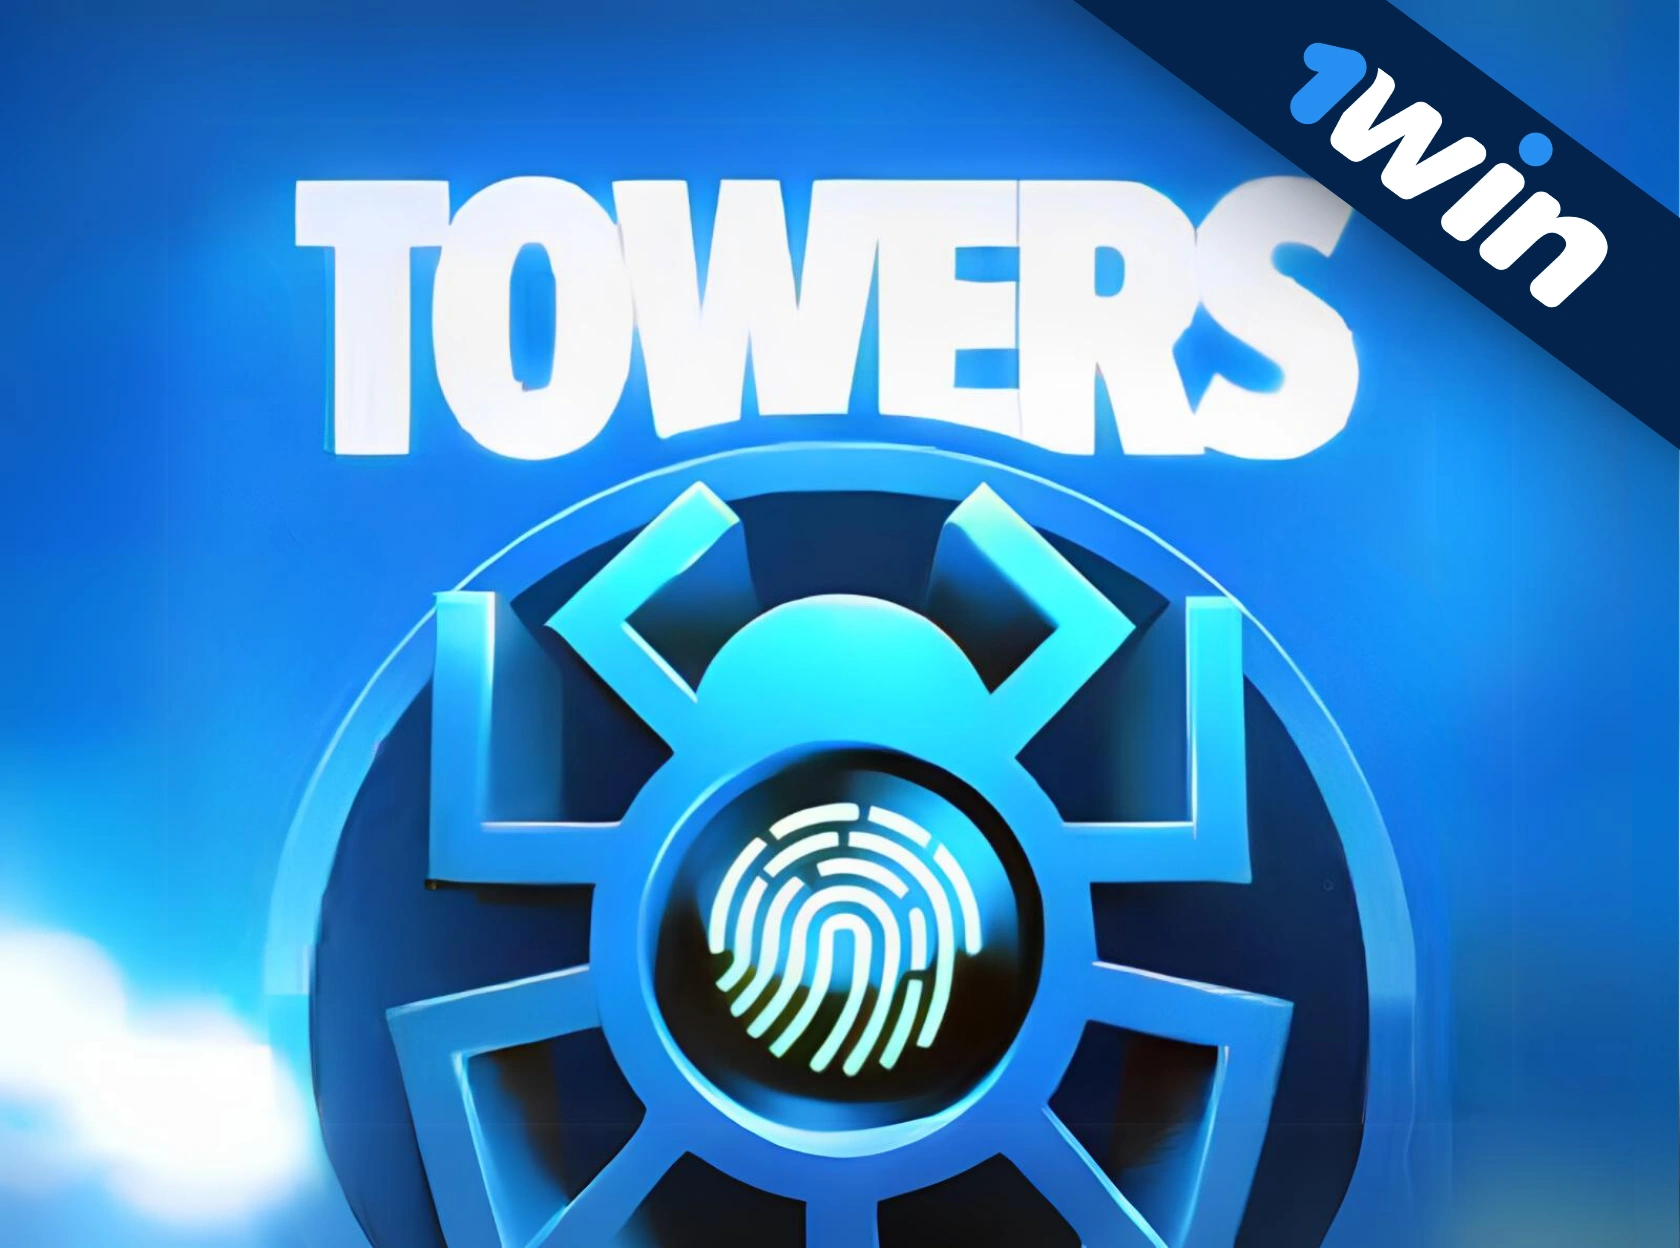 Towers 1win – нова ексклюзивна гра!